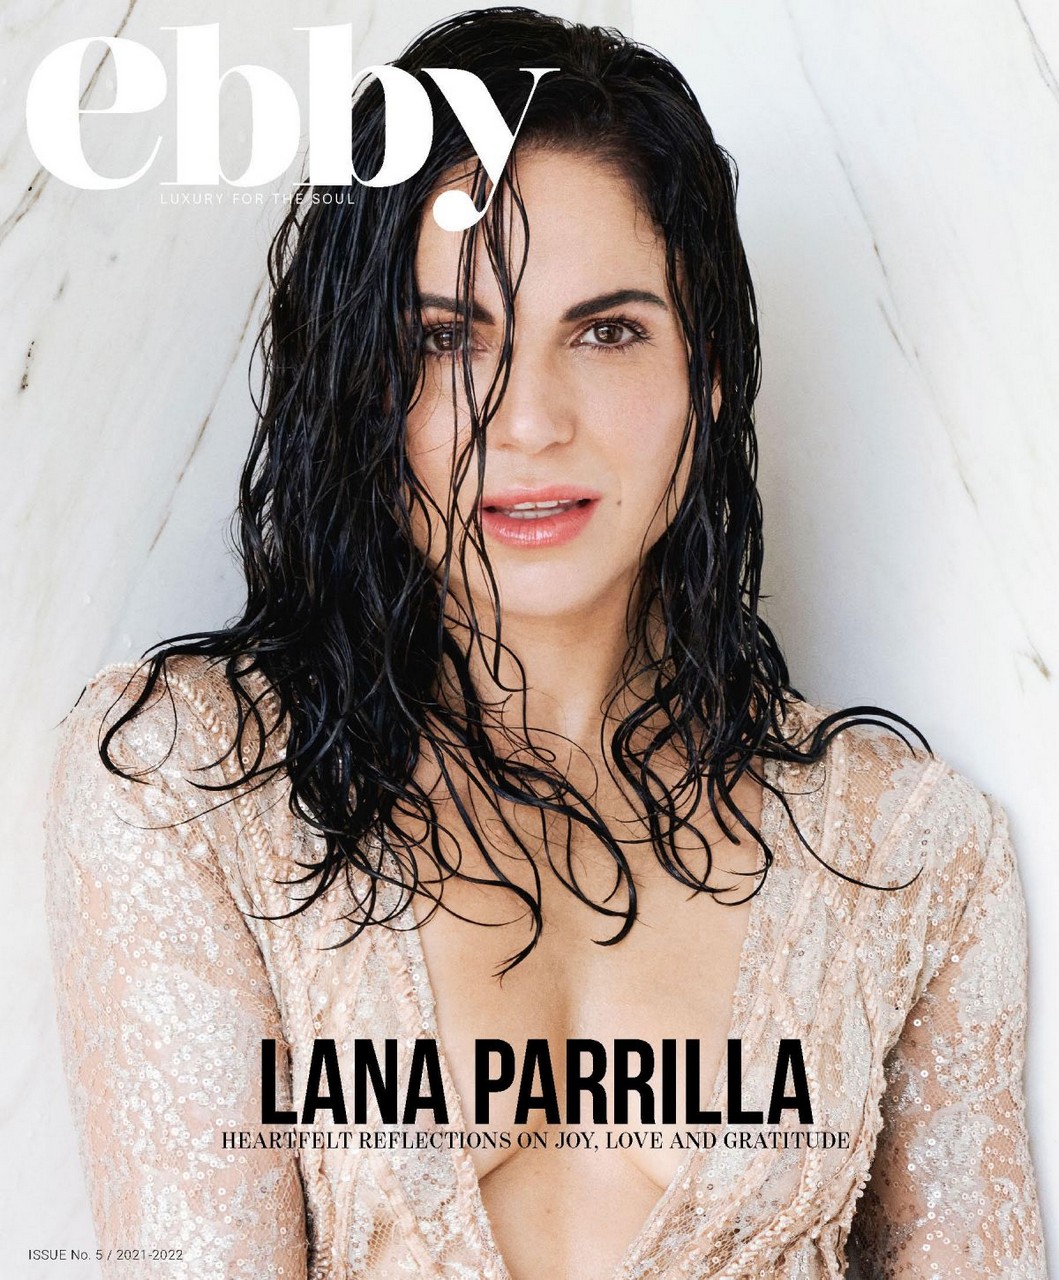 Lana Parrilla For Ebby Magazine Issue No